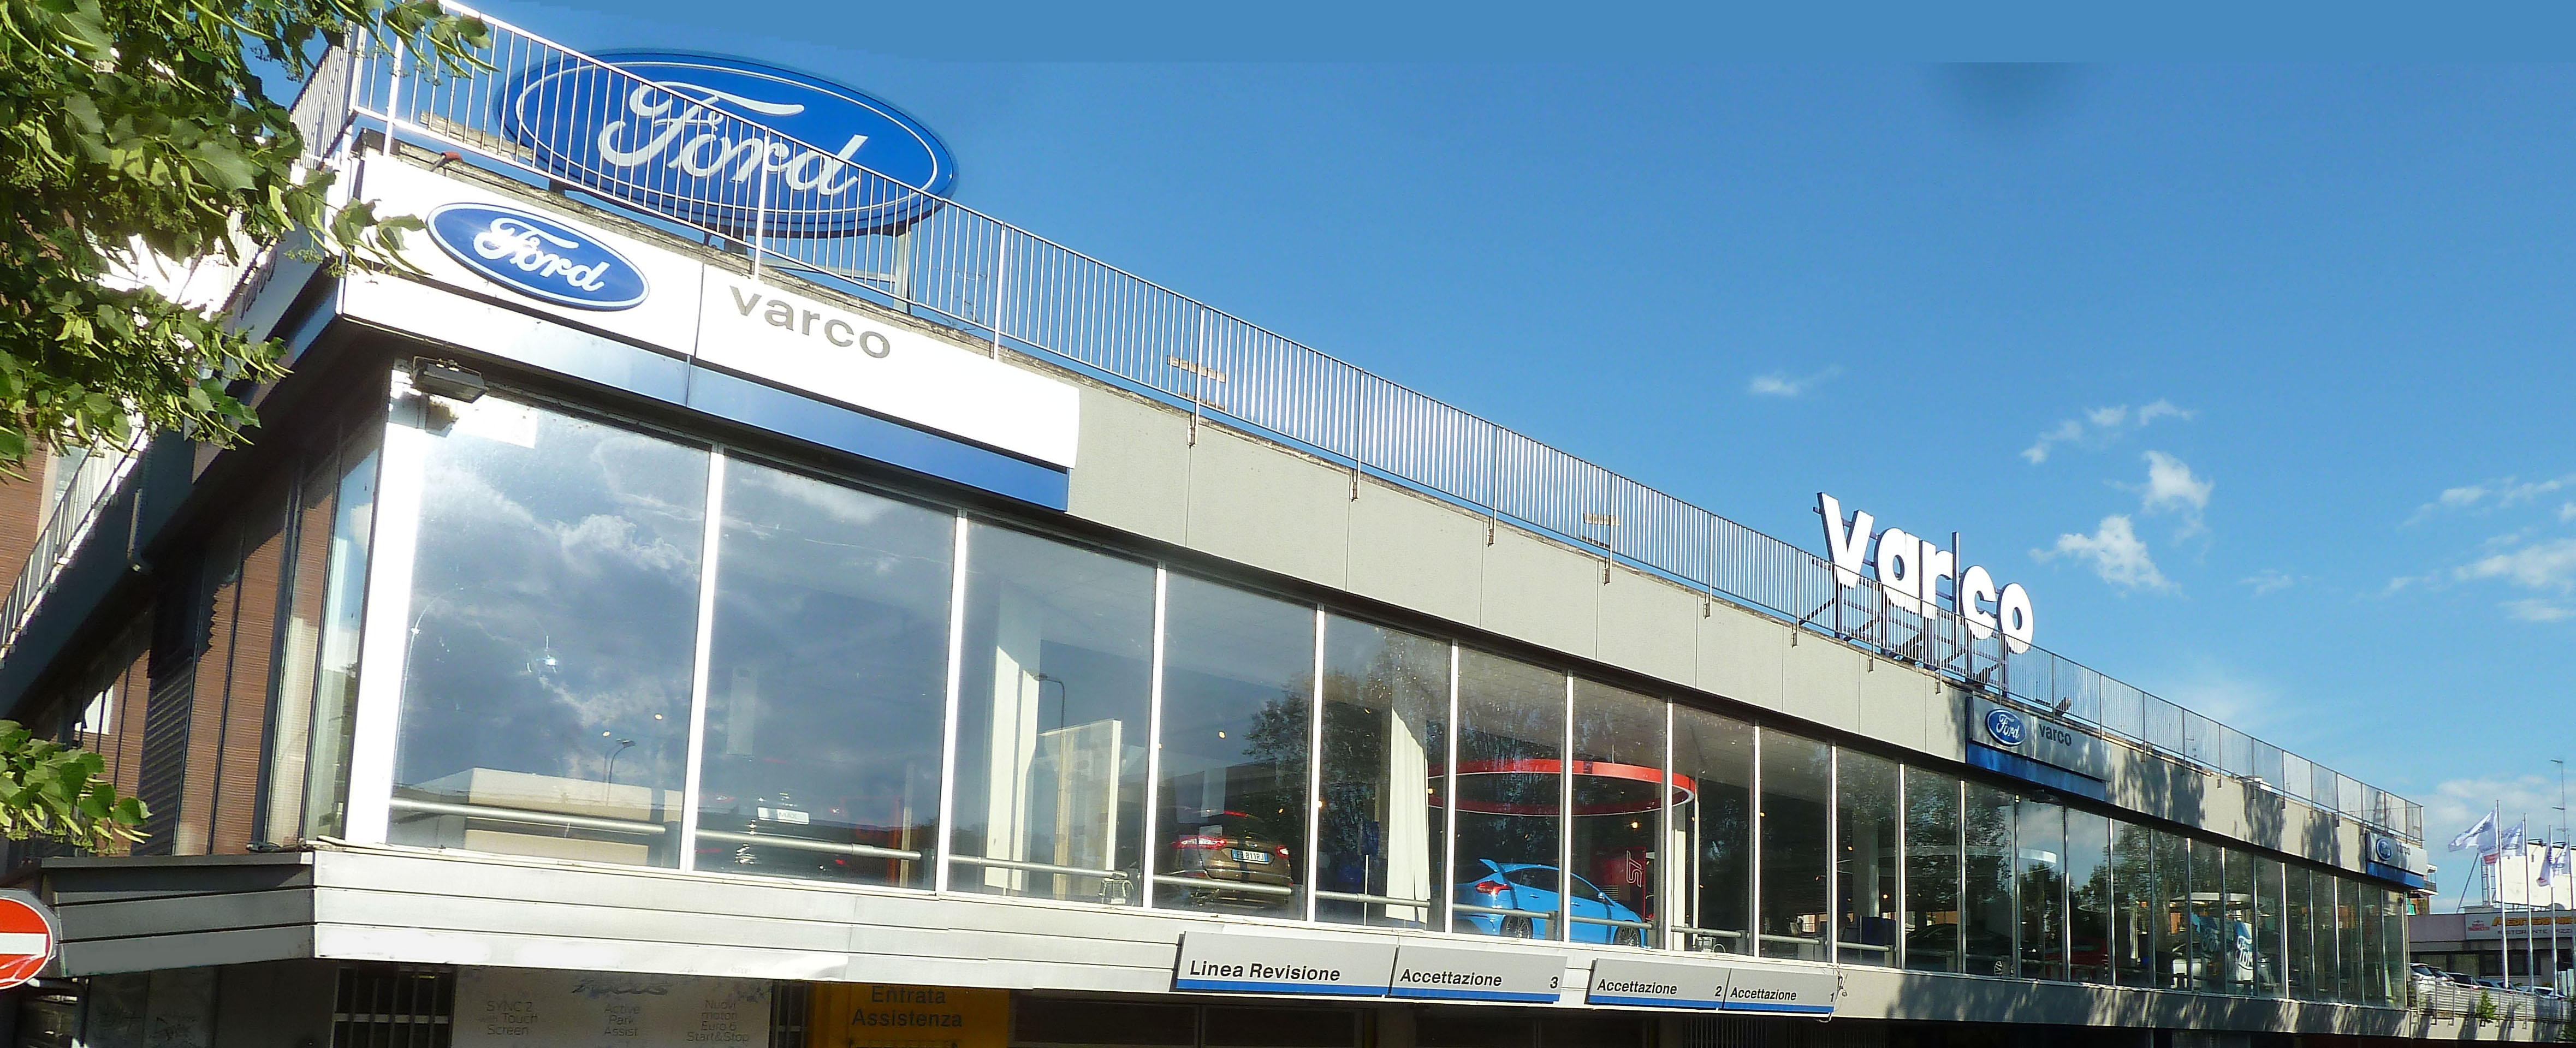 Varco Concessionaria Ford Milano -Mach-E, Kuga, Focus, Fiesta, E-Transit, 